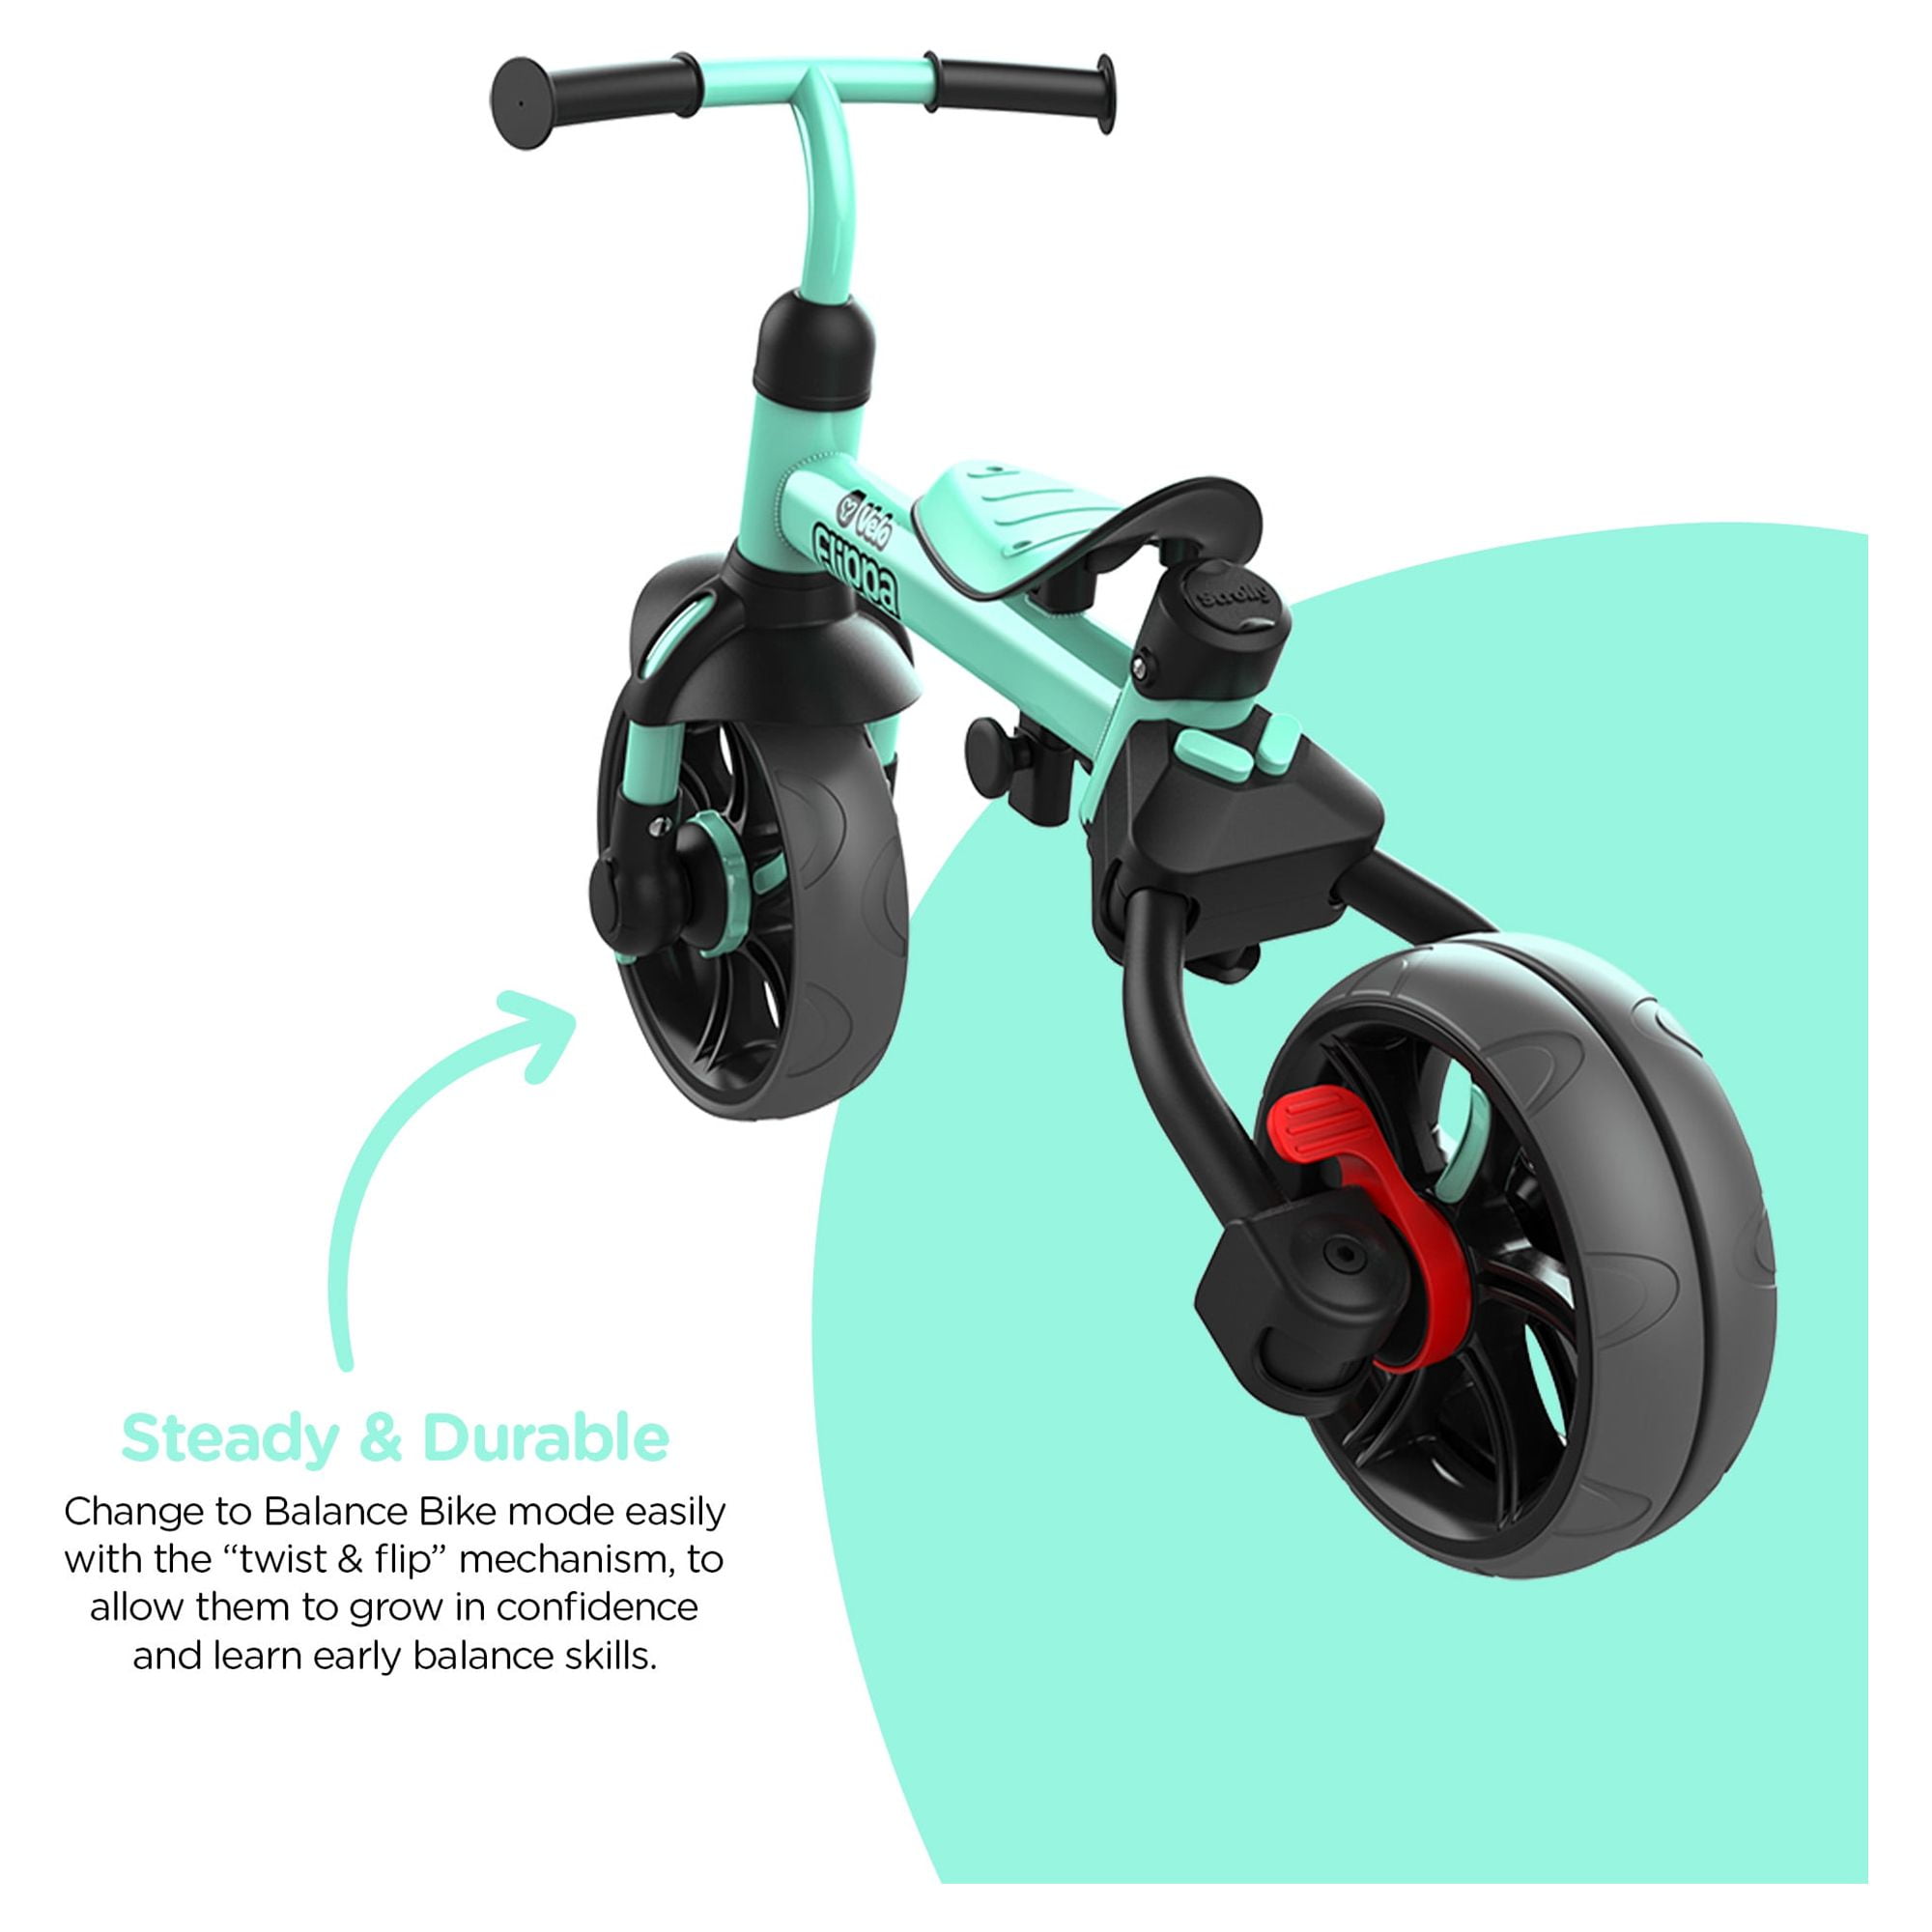 YVOLUTION Tricycle-draisienne évolutive Yvelo Flippa - Vert